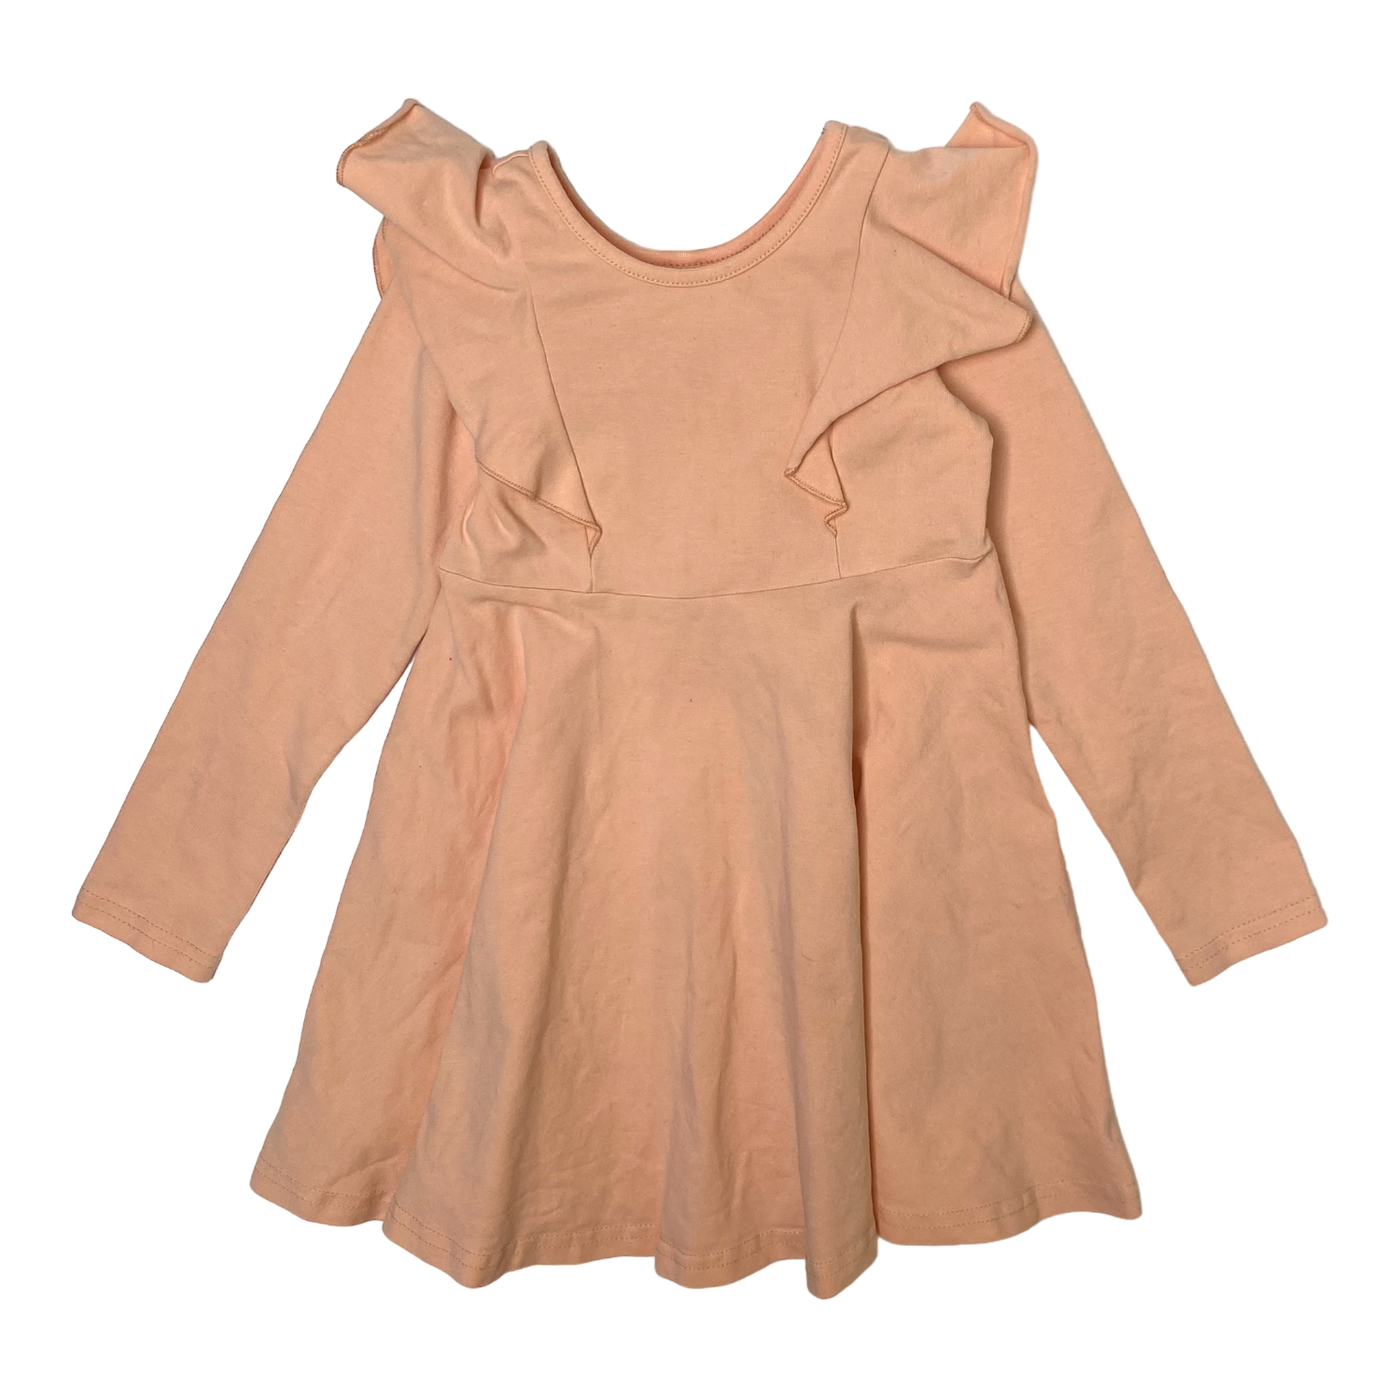 Gugguu frilla dress, coral pink | 80cm